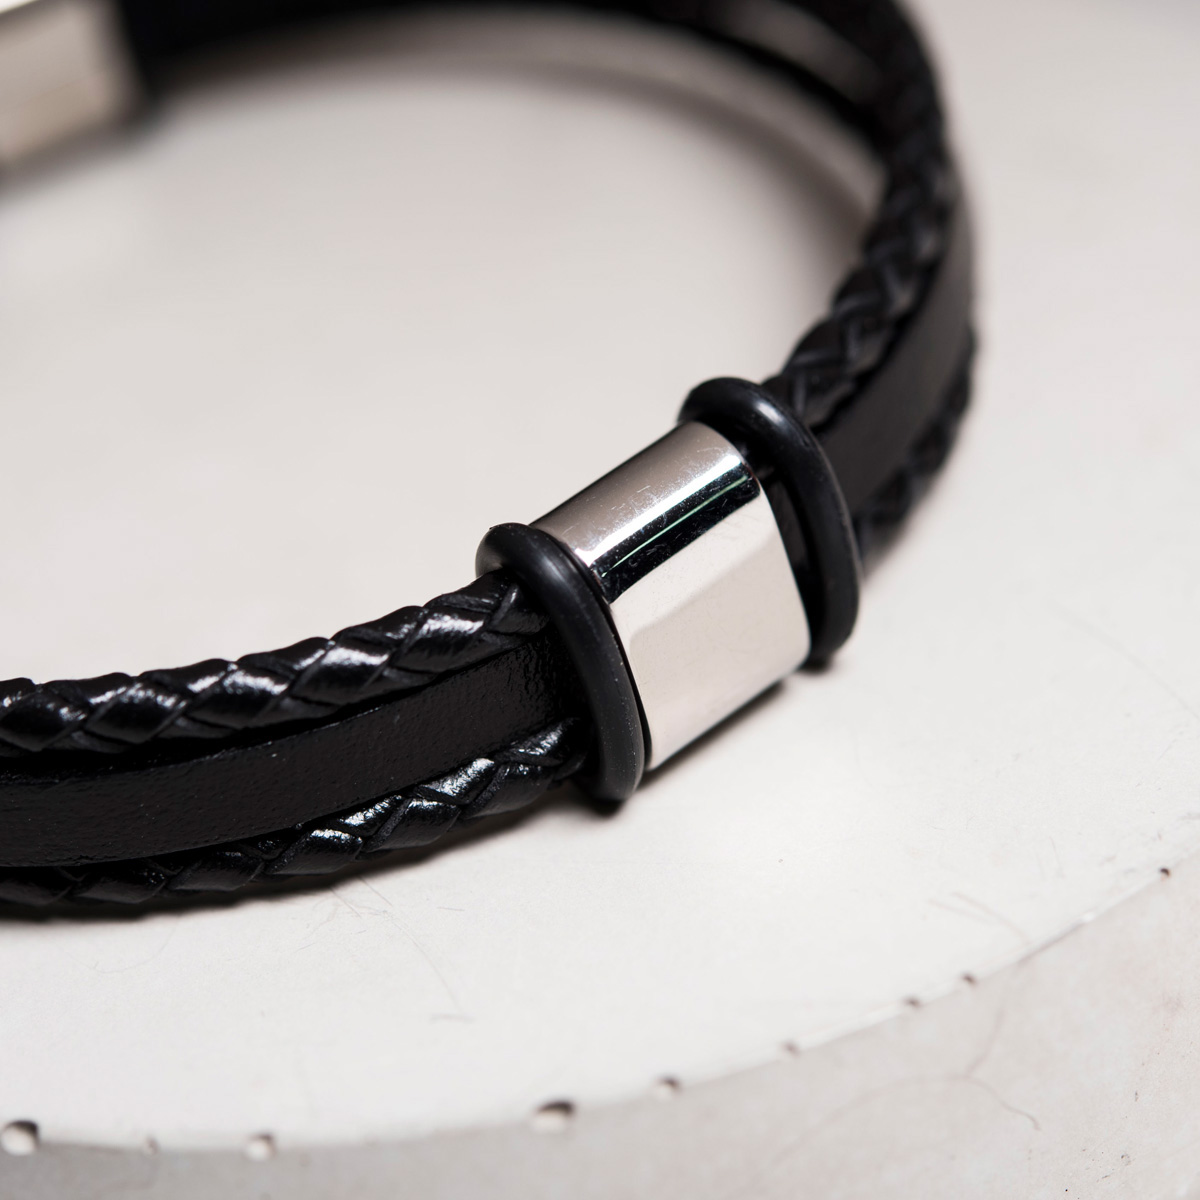 Engraved Men's Leather Bracelet - Any Message